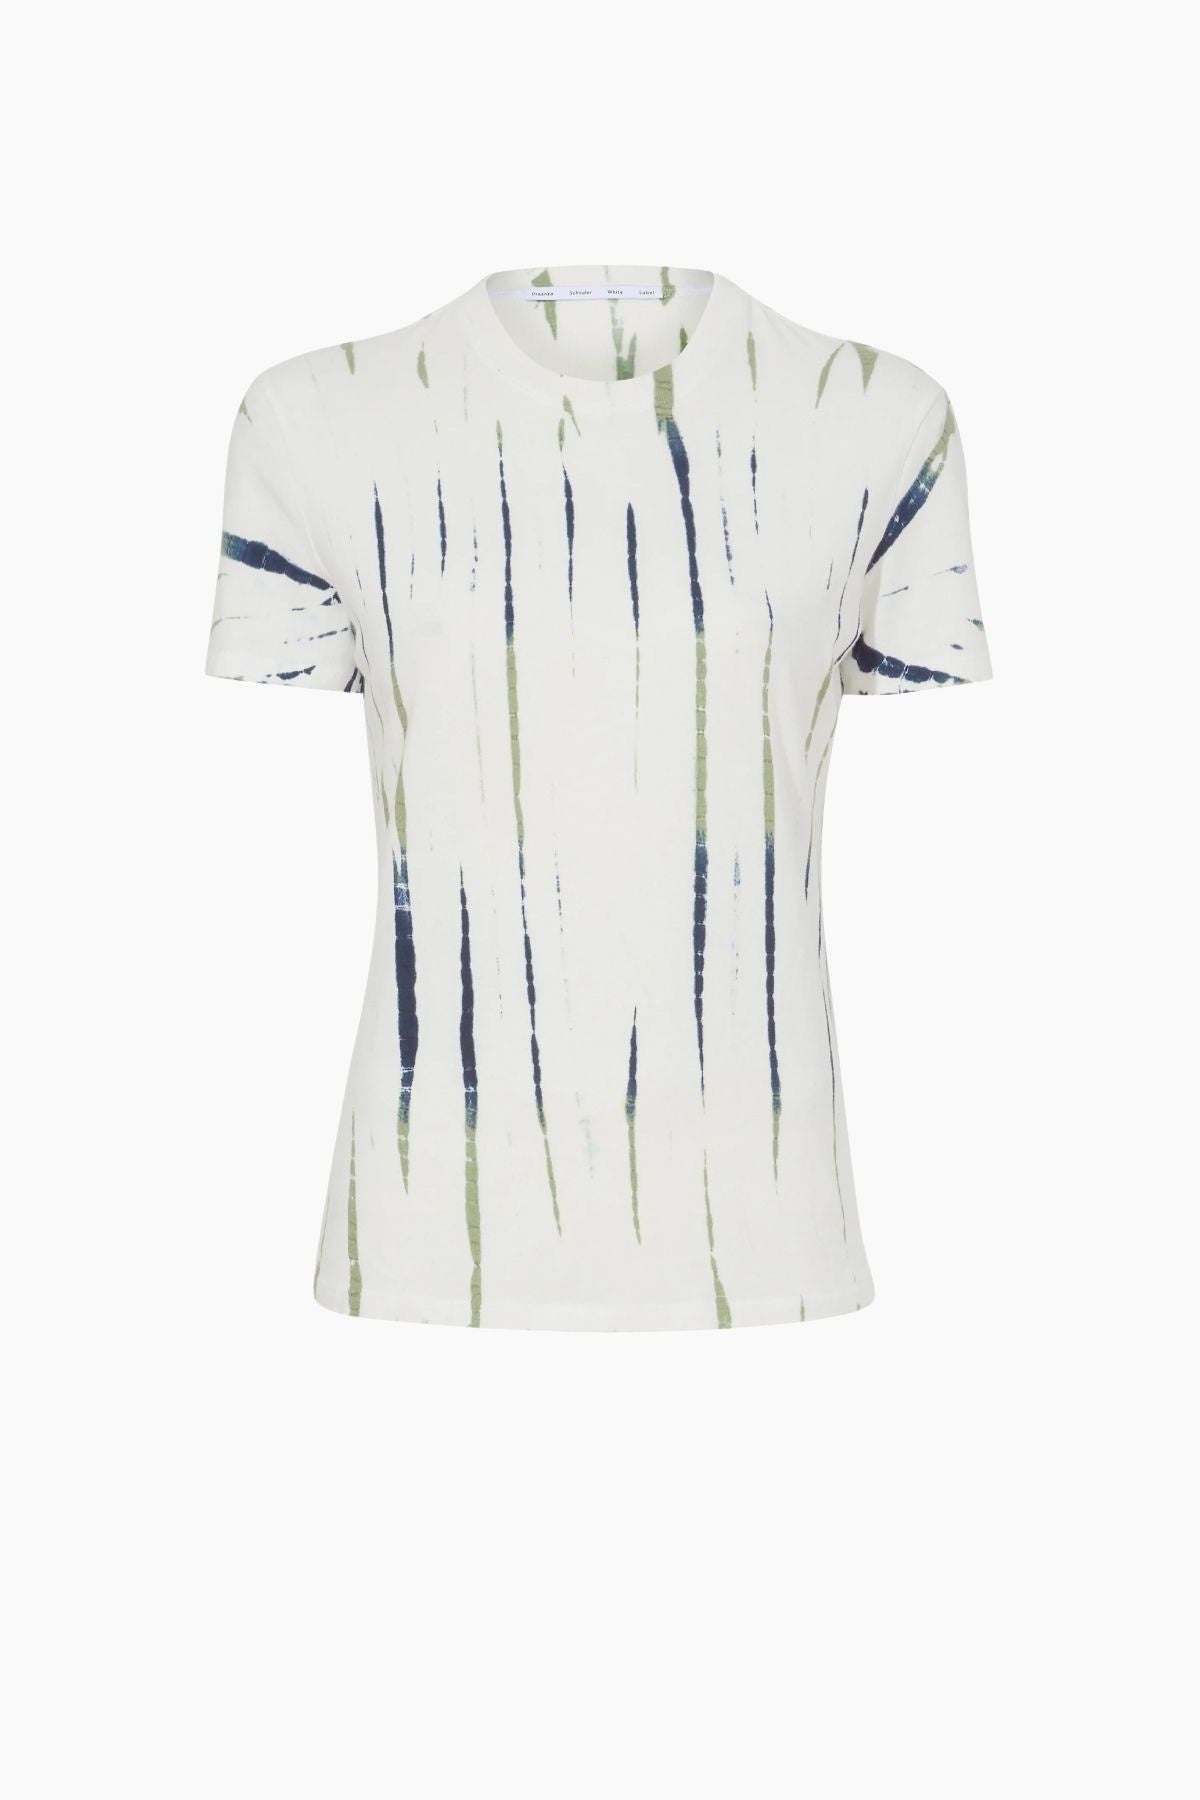 Proenza Schouler White Label Finley Tie Dye T-Shirt - White/ Navy/ Olive